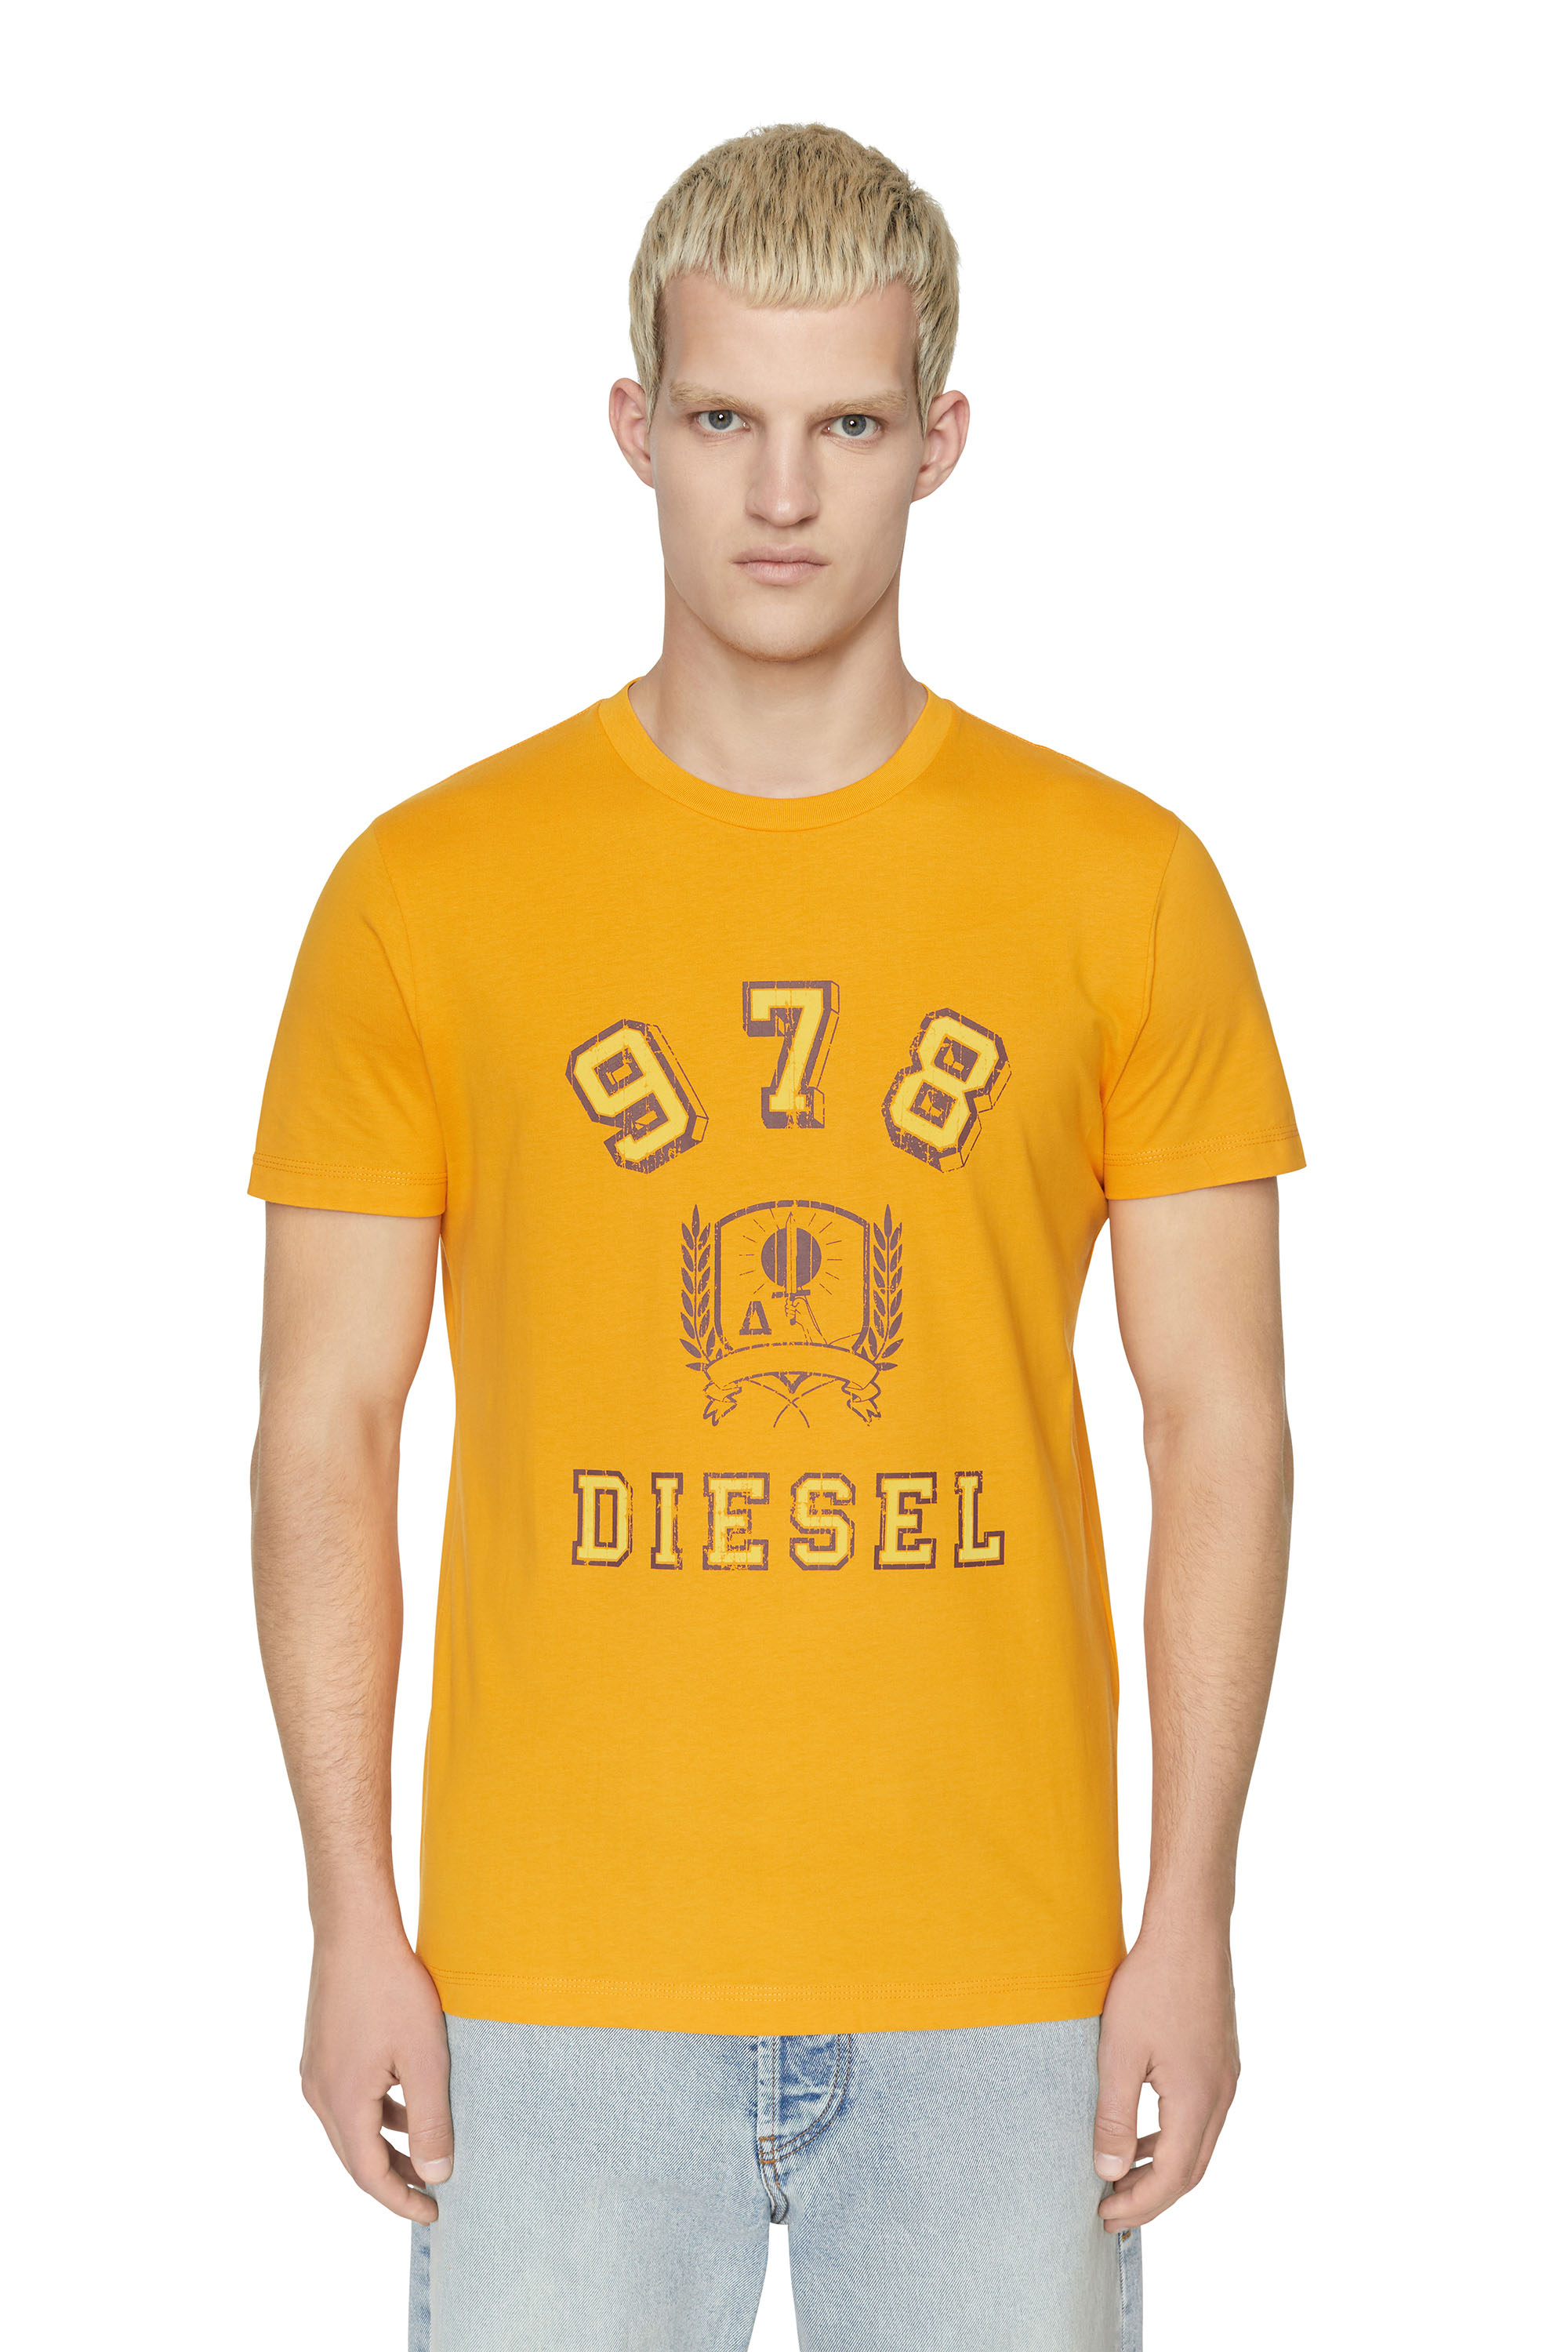 Diesel - T-shirt con stemma e logo 978 Diesel - T-Shirts - Uomo - Giallo